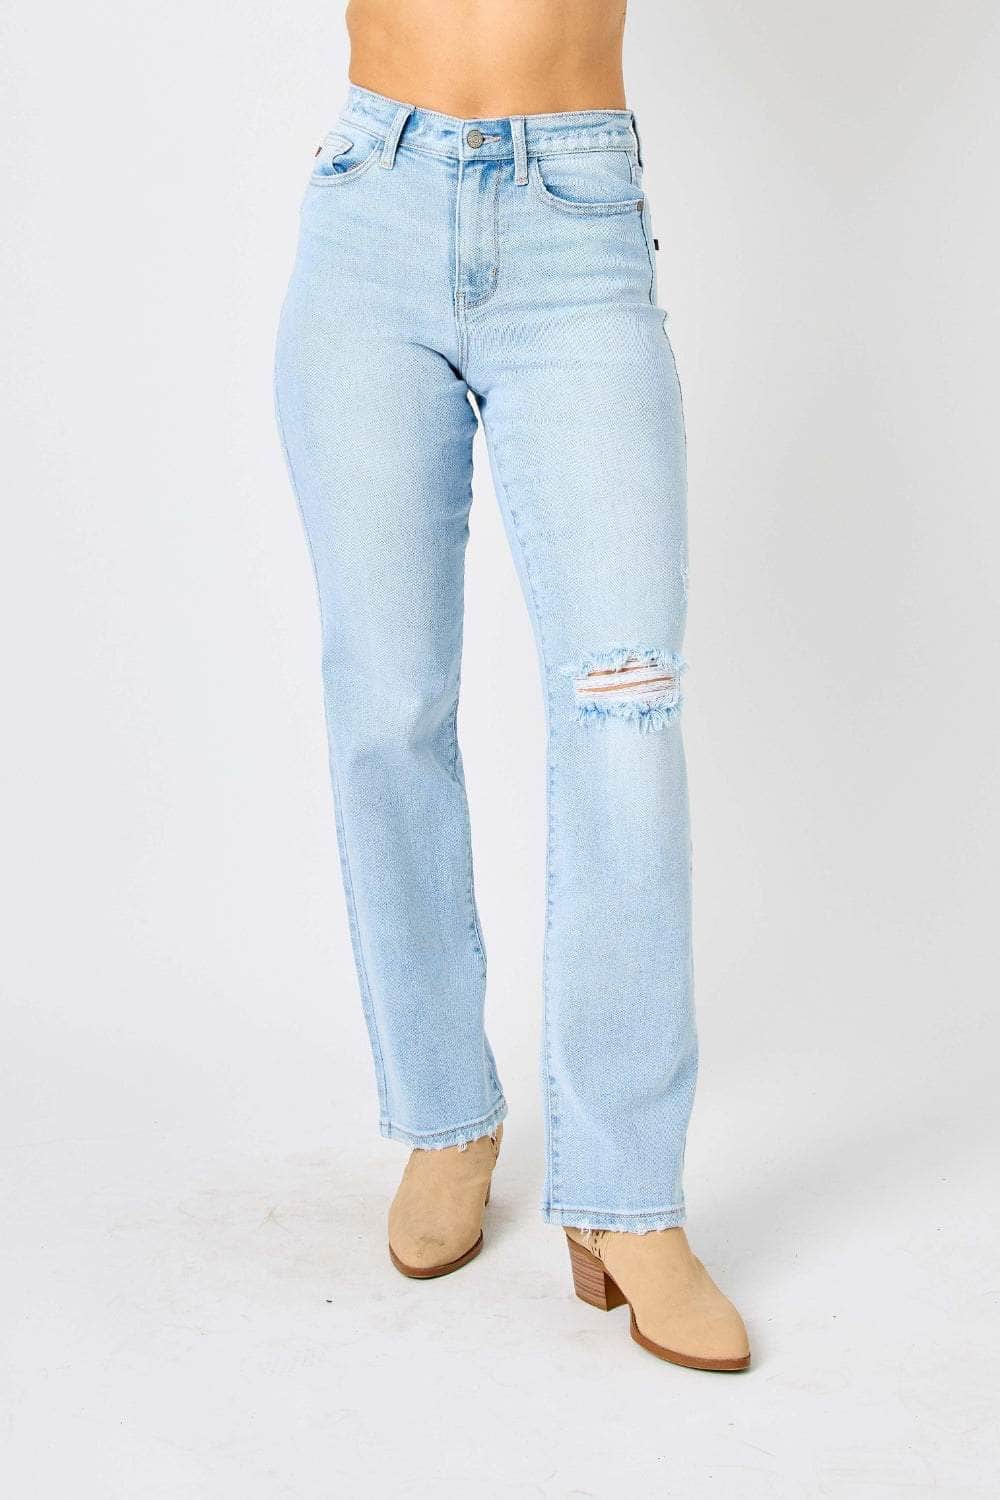 Judy Blue Full Size High Waist Distressed Straight Jeans Light / 0(24)